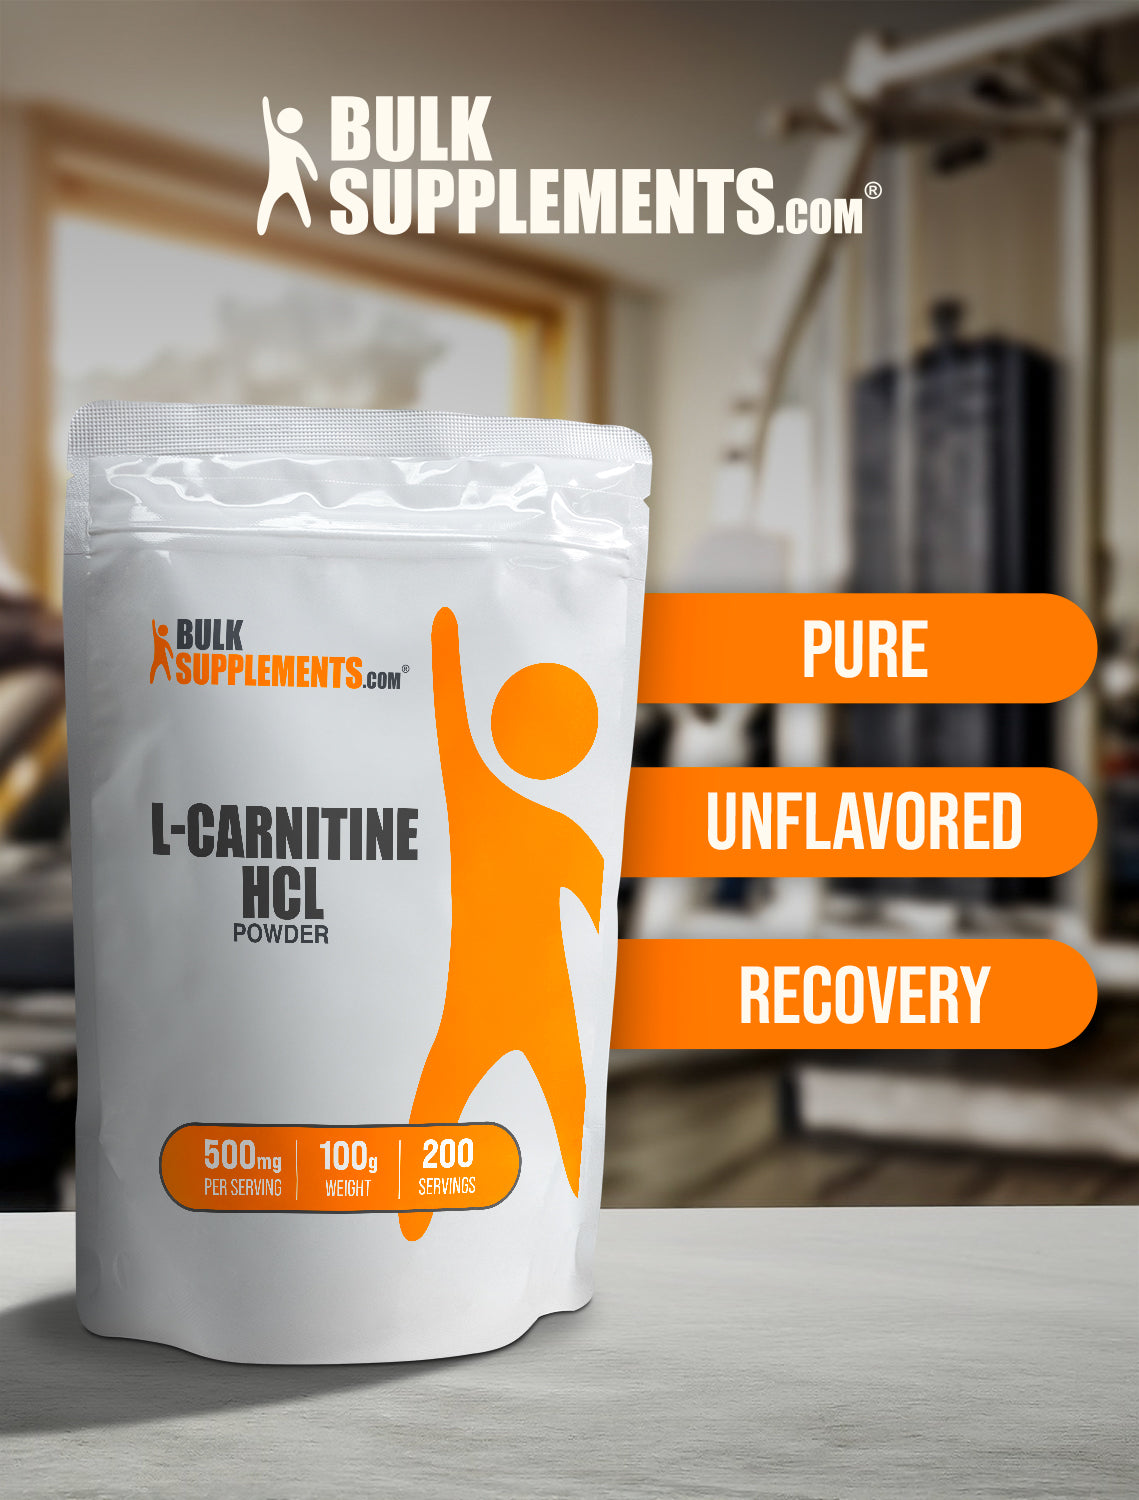 L-Carnitine HCl powder keyword image 100g